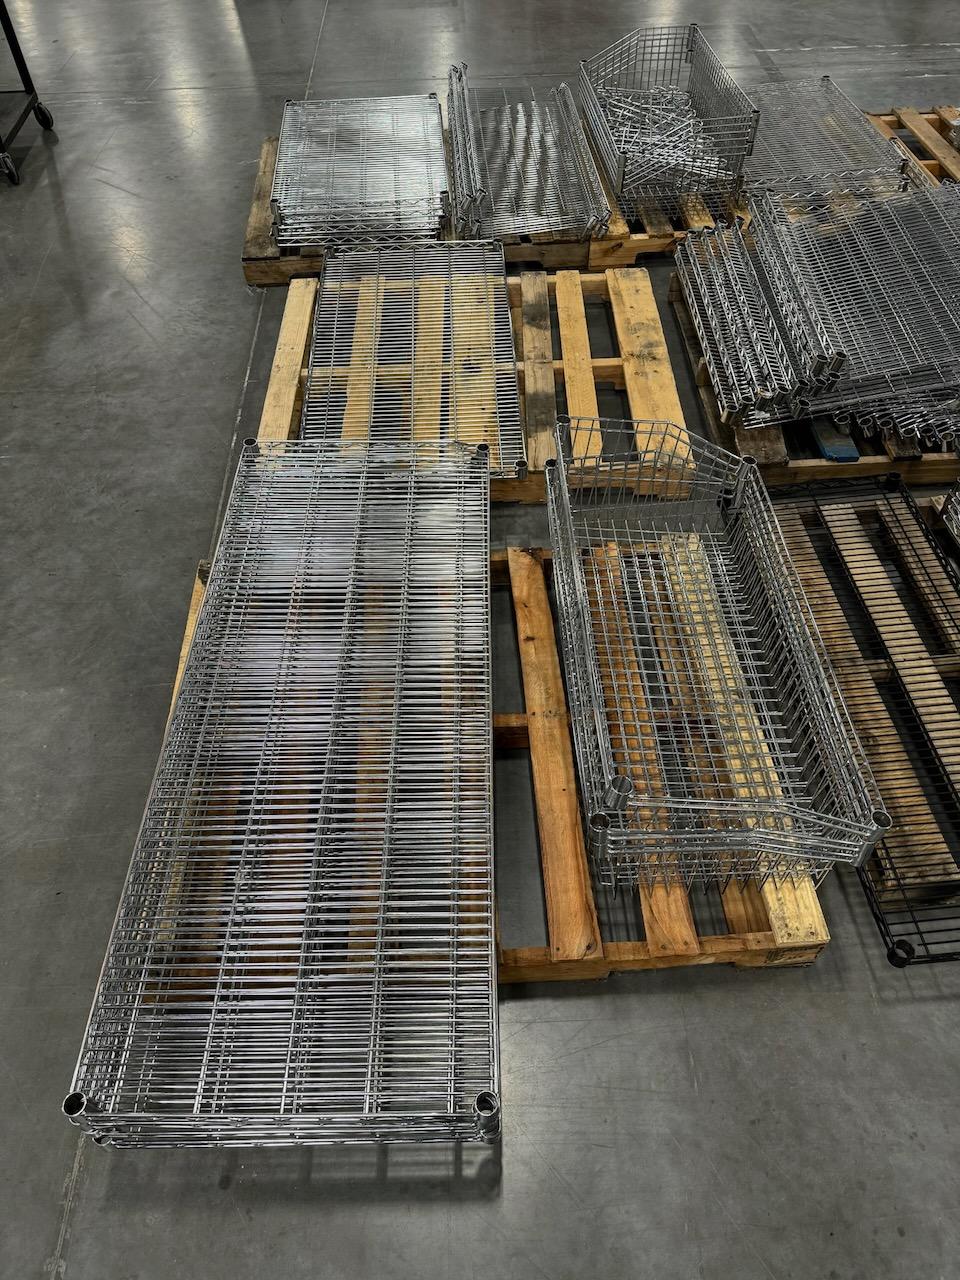 Pallets of Asst'd Metro Rack Poles/Shelves/Accessories